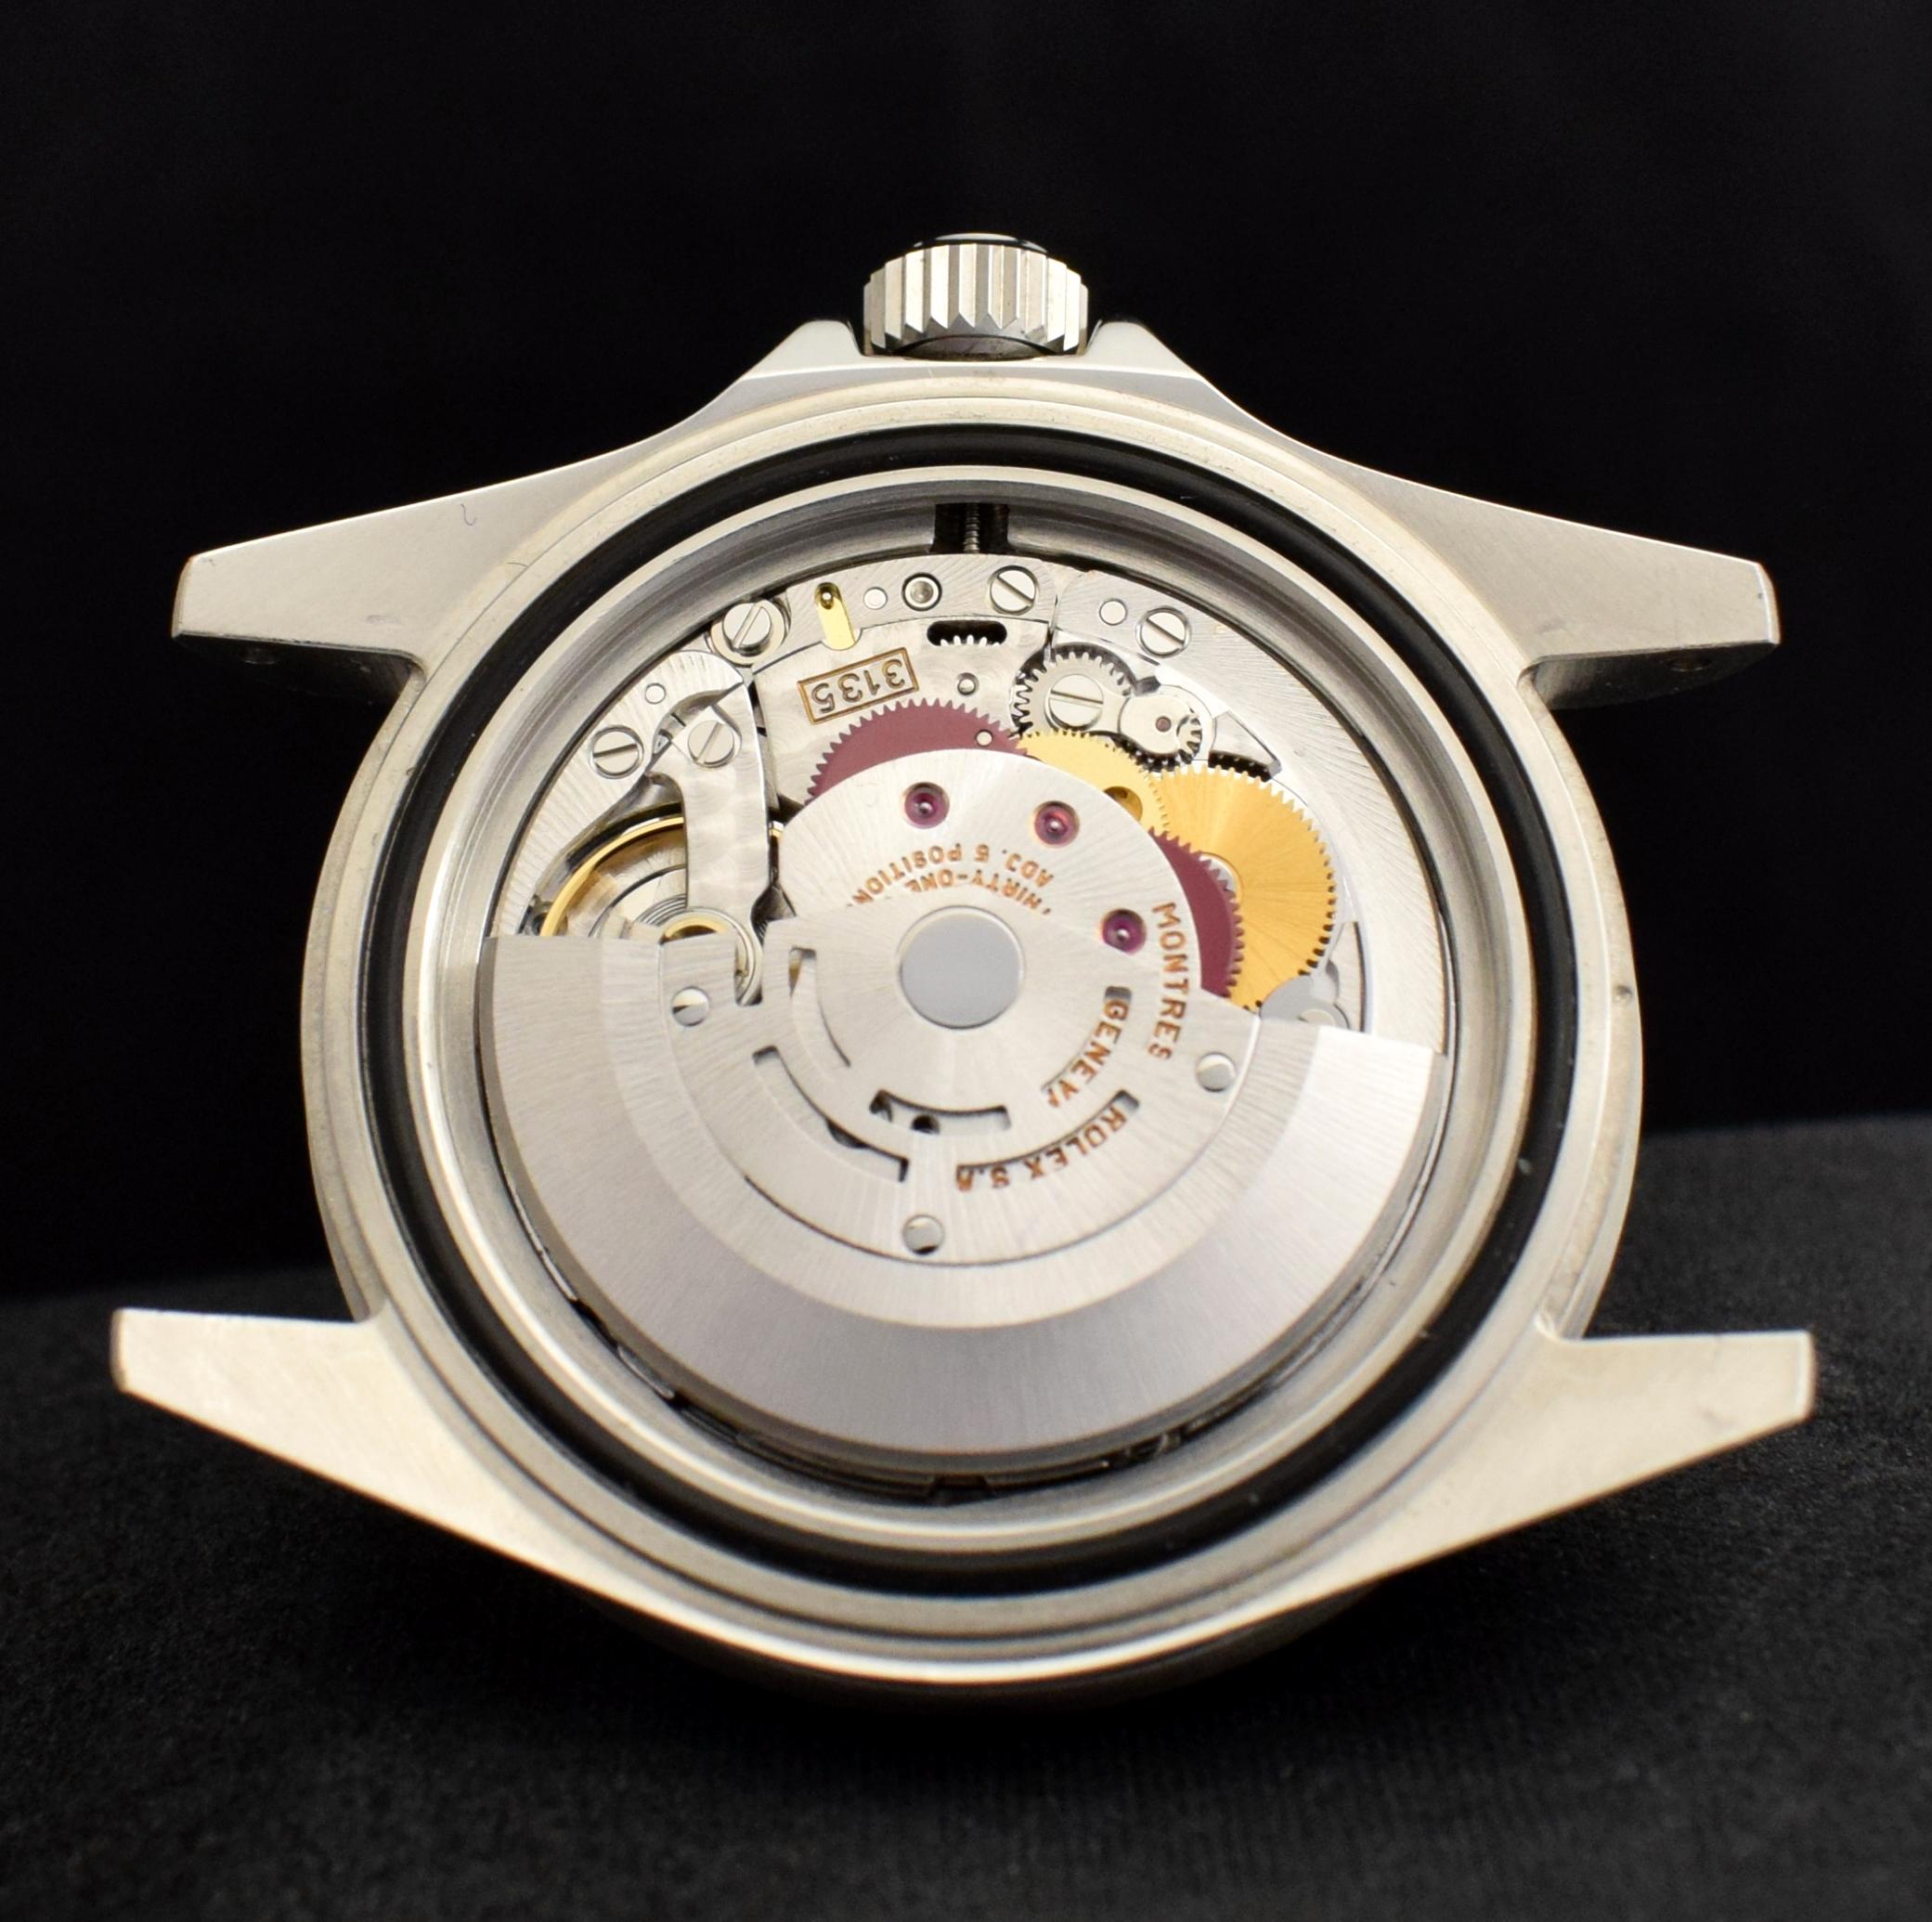 Rolex Submariner Tiffany & Co. 16610 Steel Automatic Watch w/Paper Box Set, 1991 4